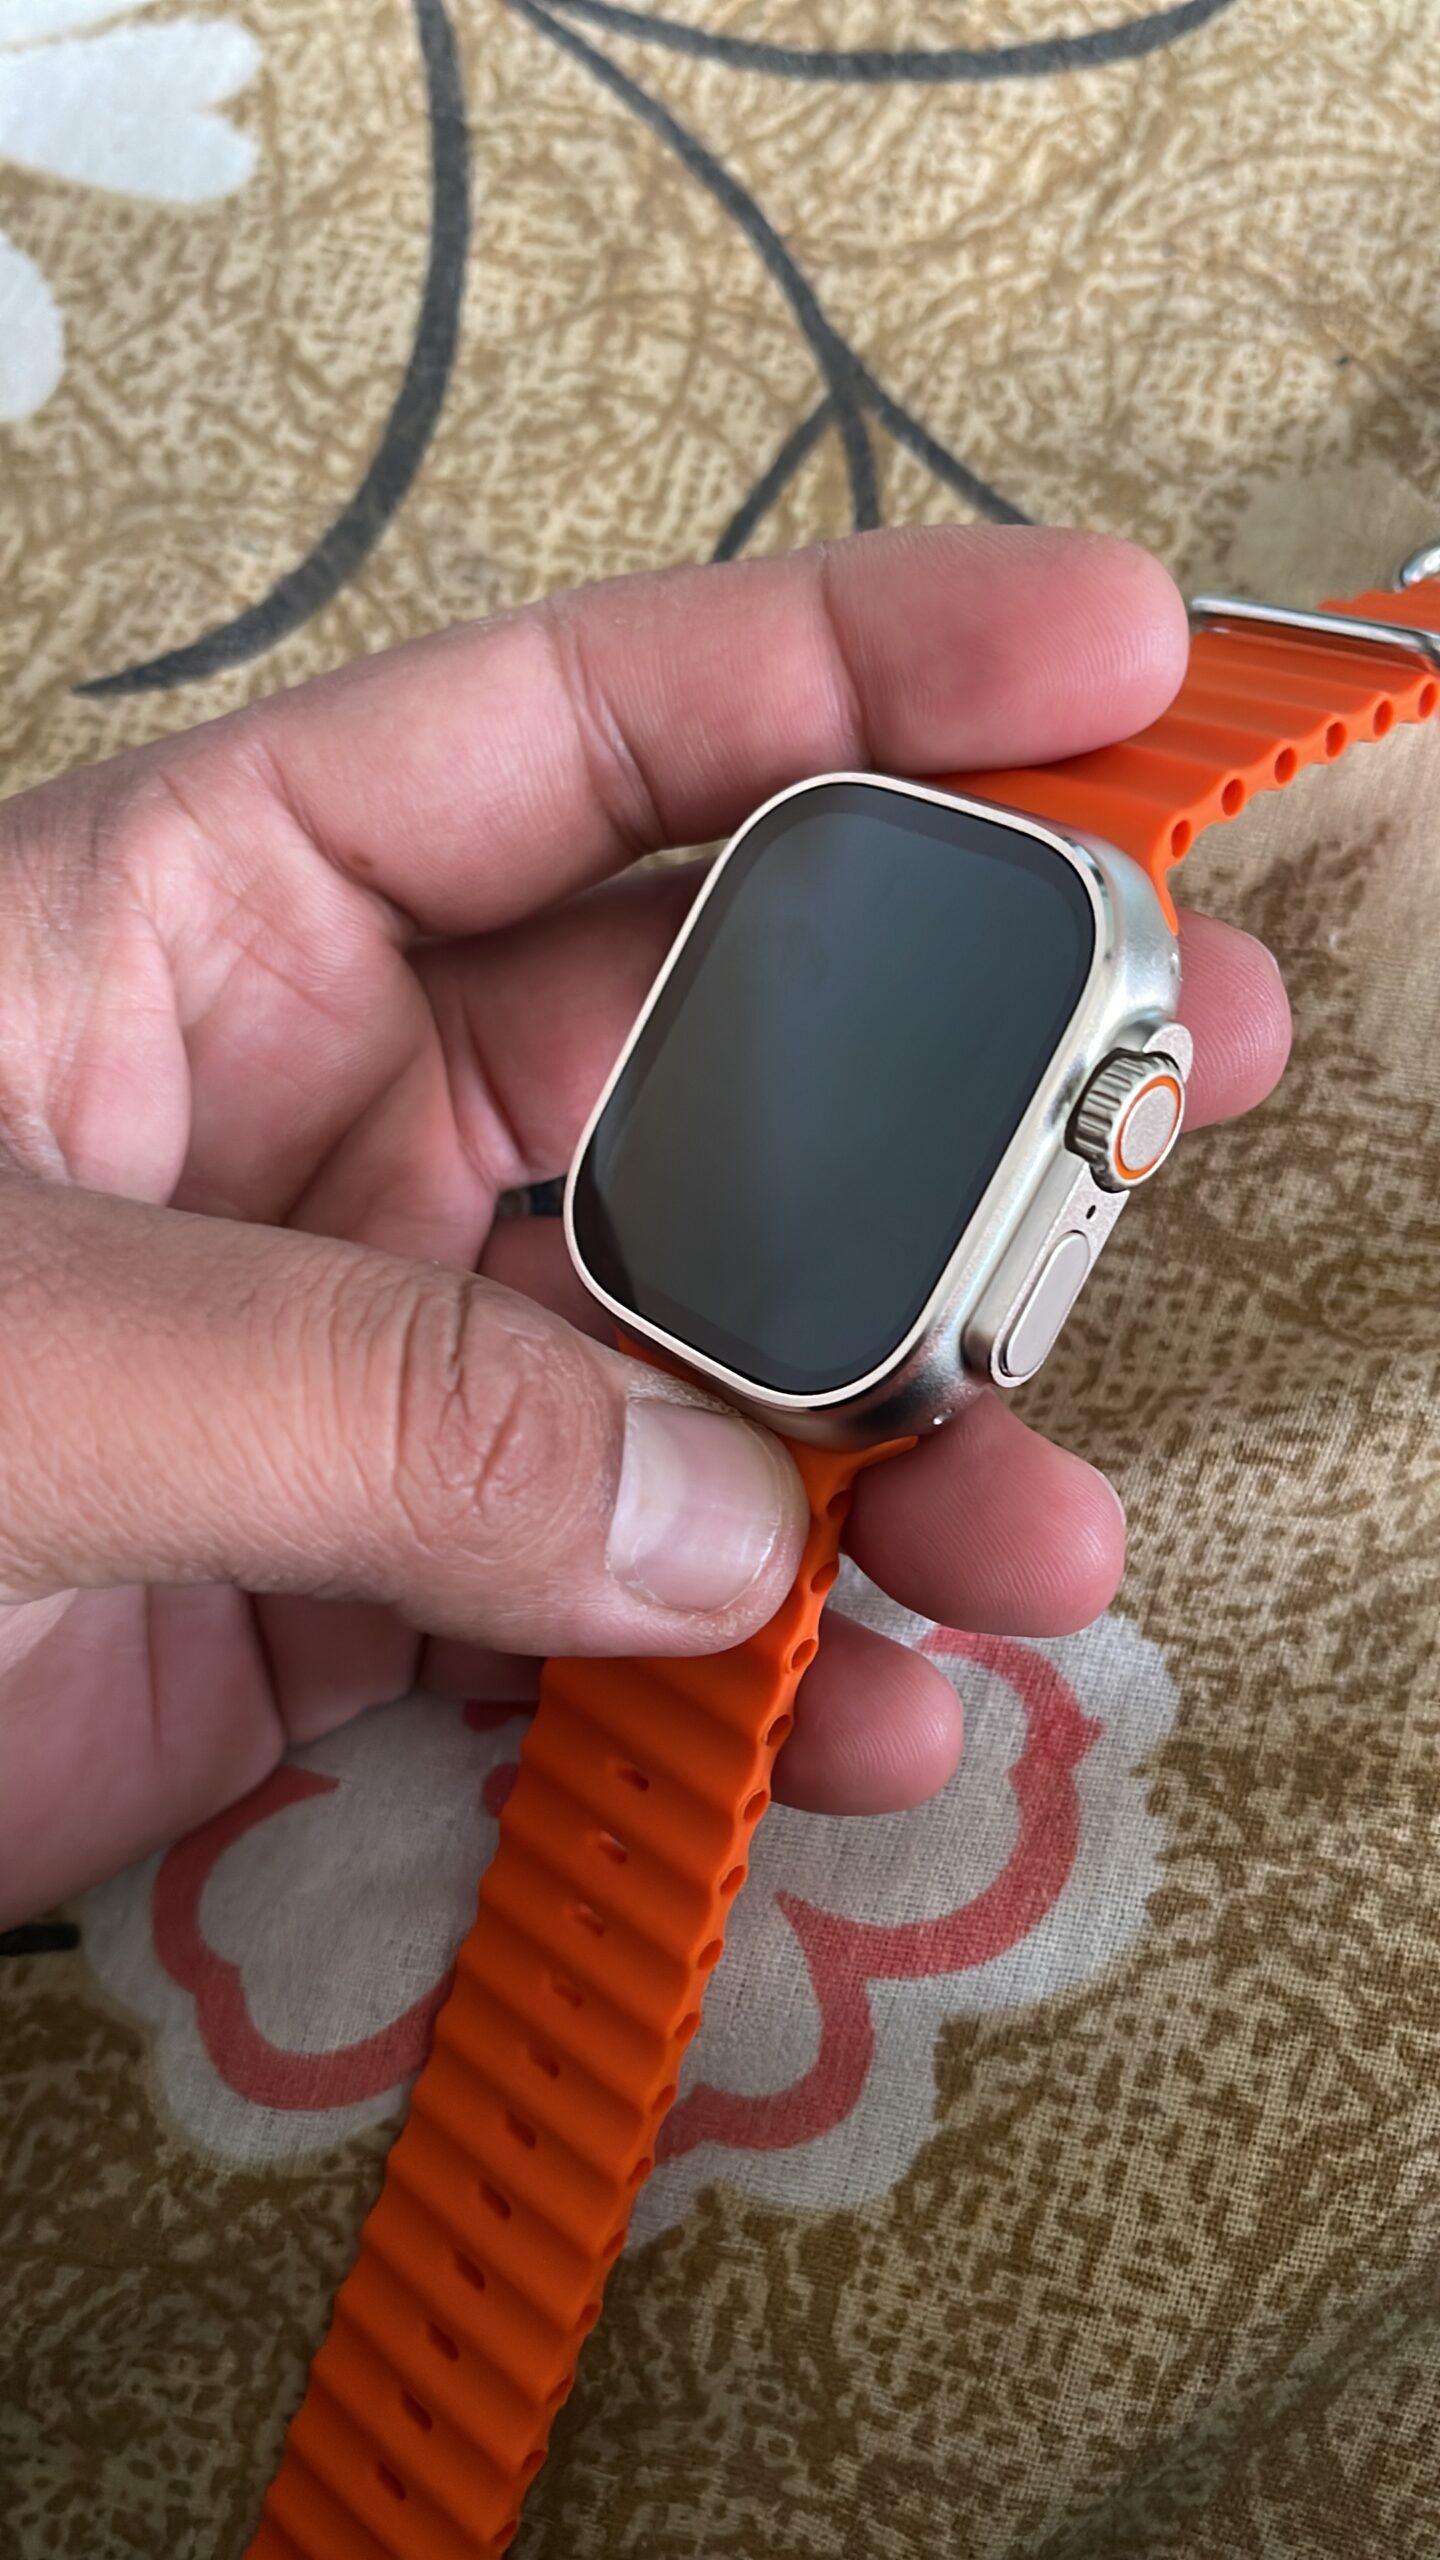 Orange Amoled Display Smartwatch, Model Name/Number: Hk8 Pro Max Ultra at  Rs 2600/piece in Tirunelveli